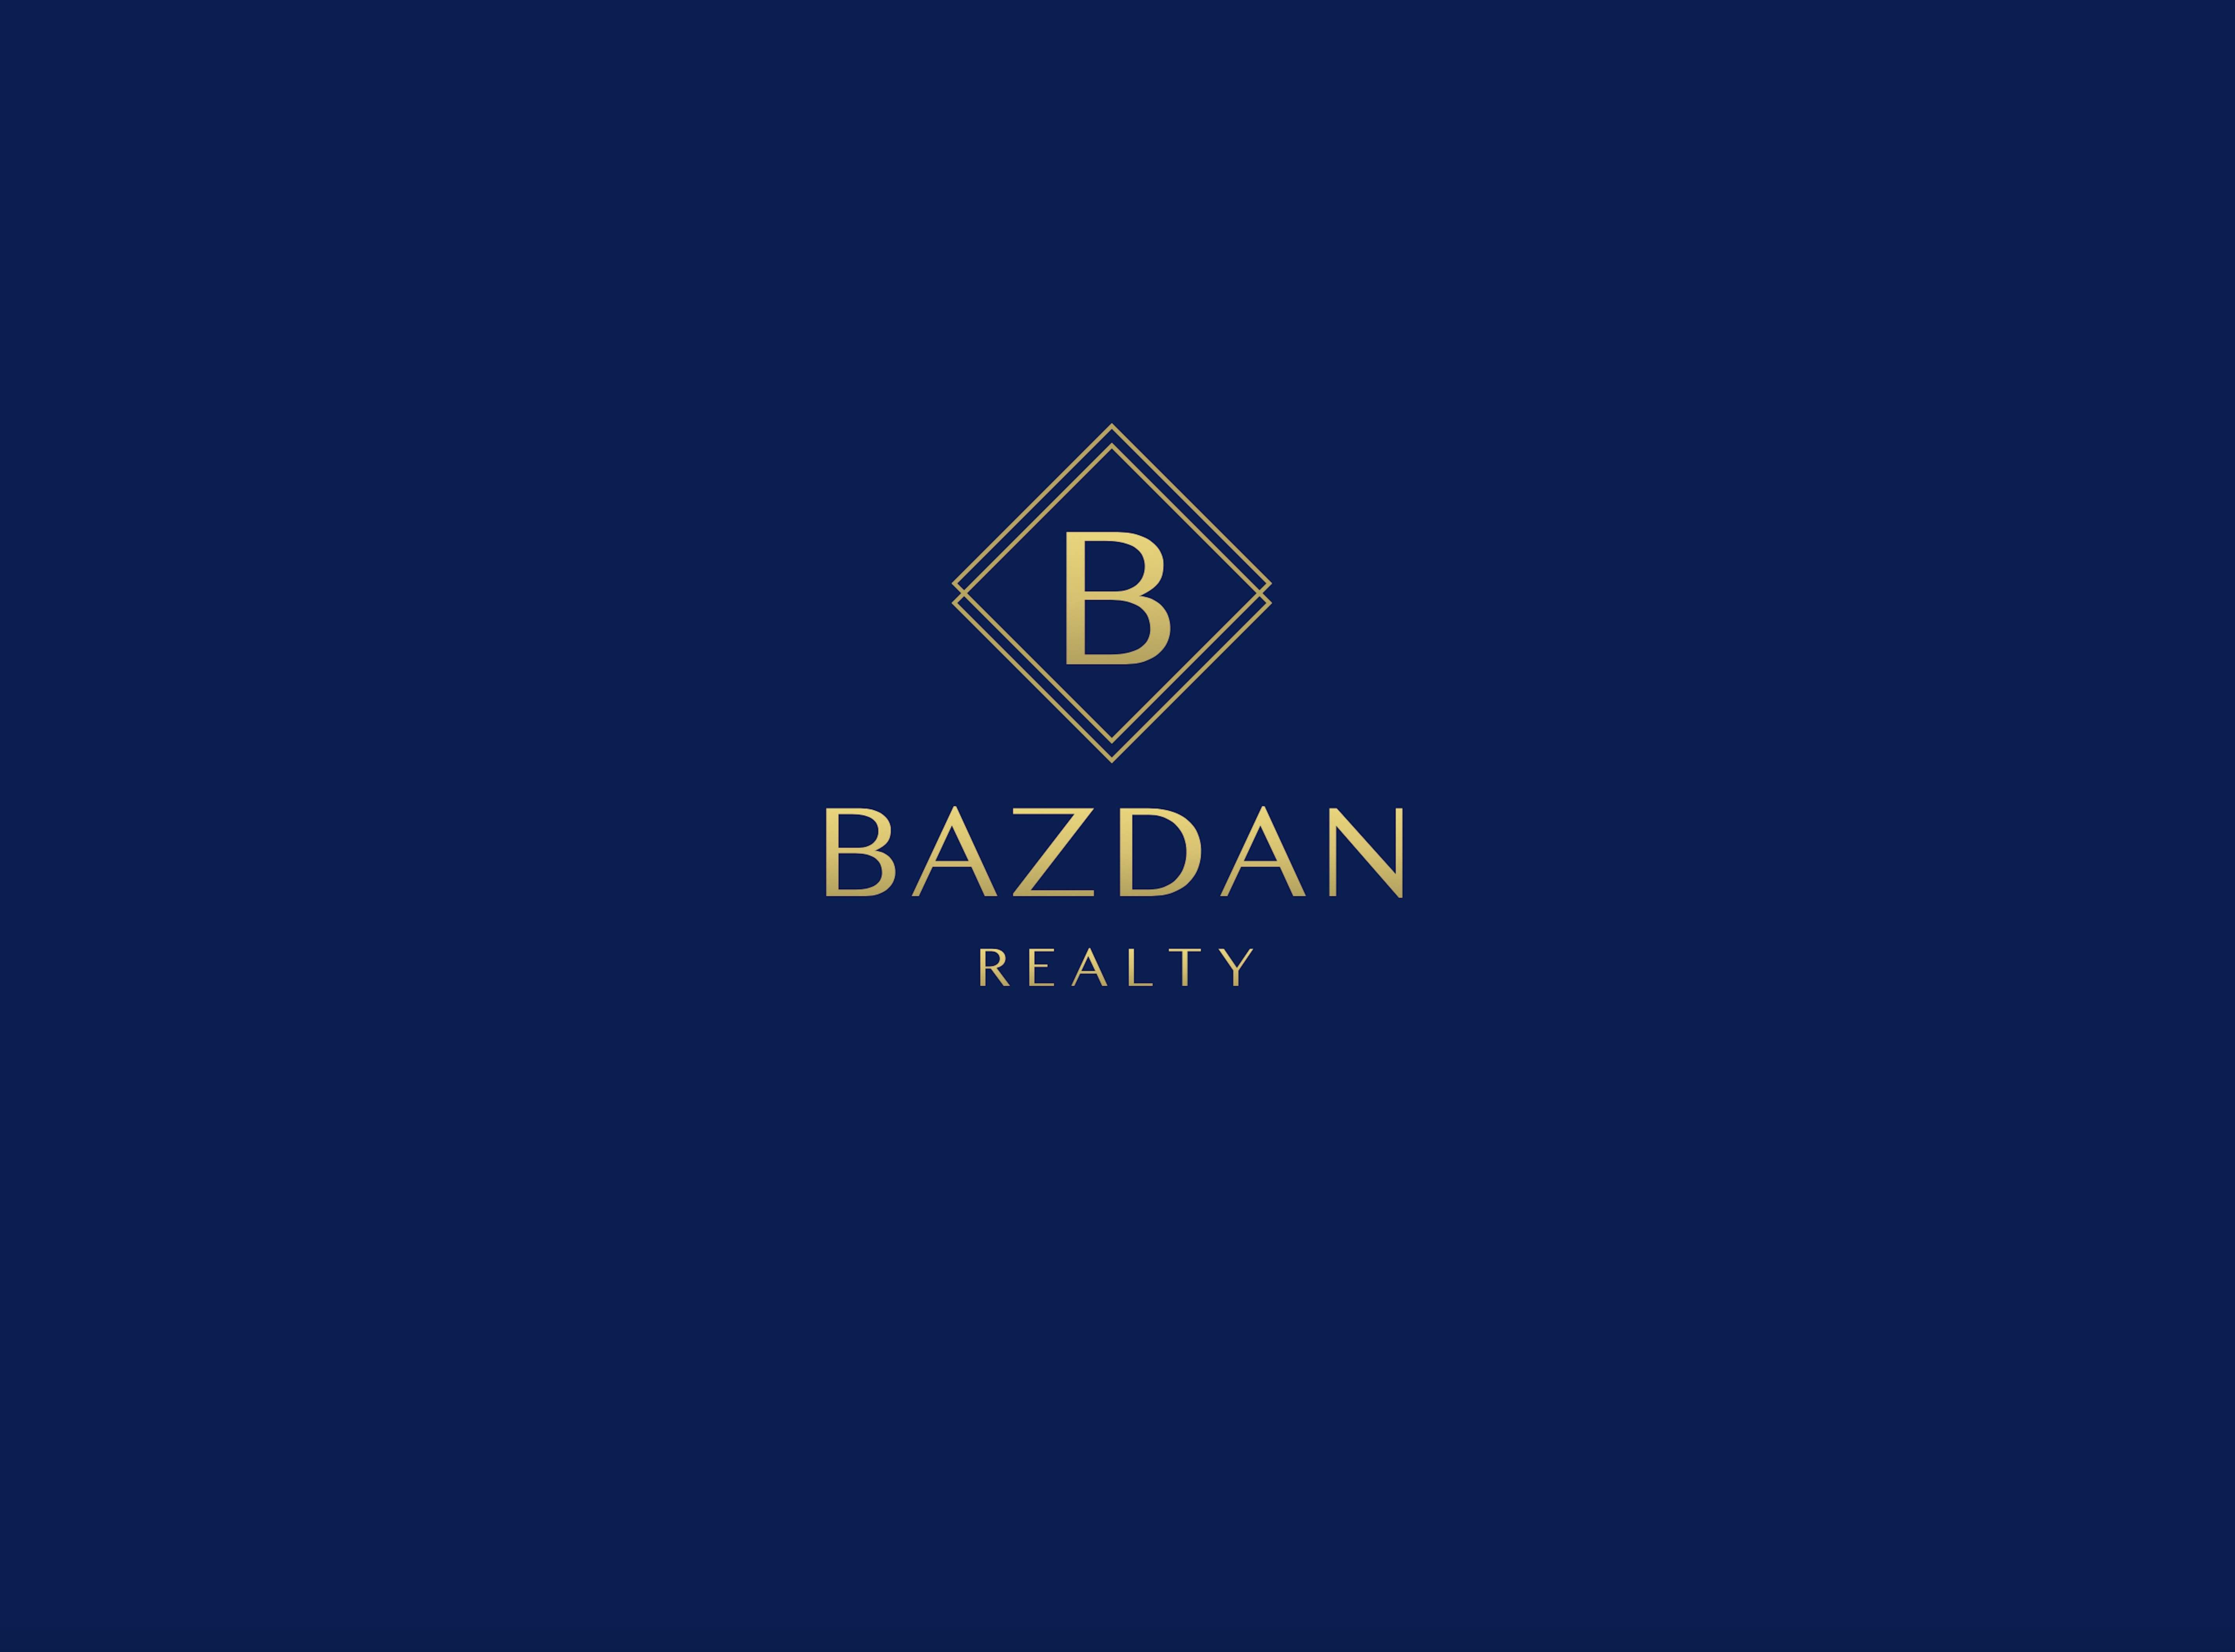 Bazdan Realty Company  - Relationship Driven Real Estate Brokerage